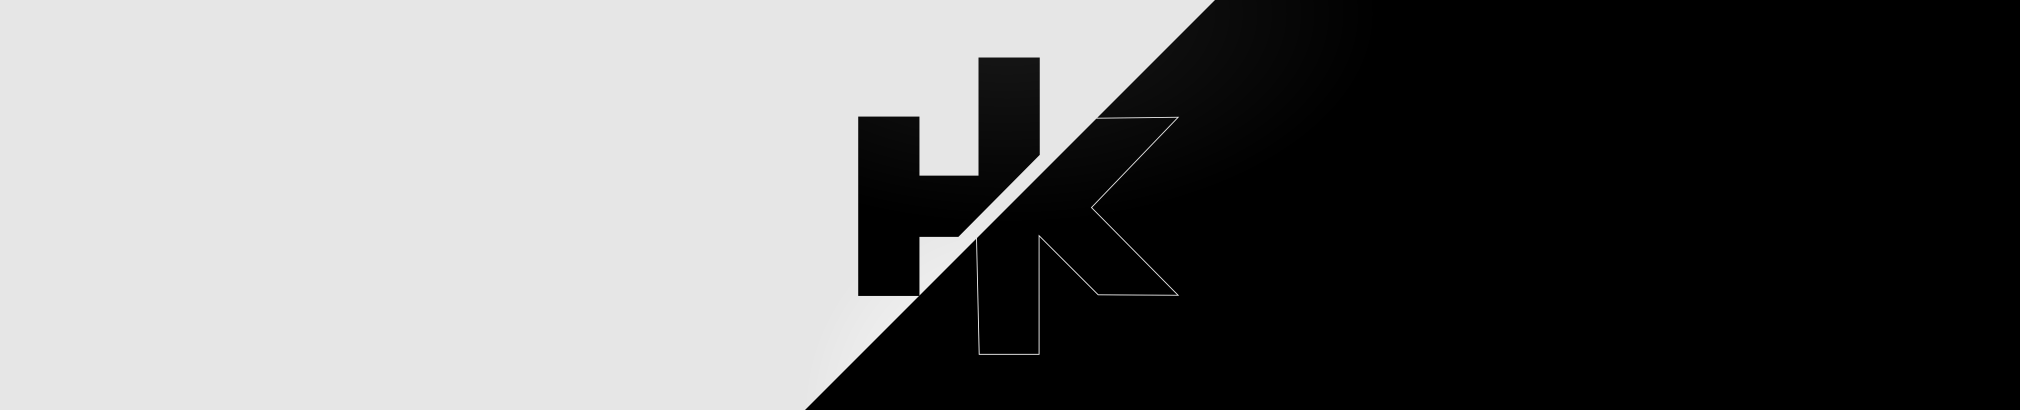 Banner de perfil de HK Keystone Herbett